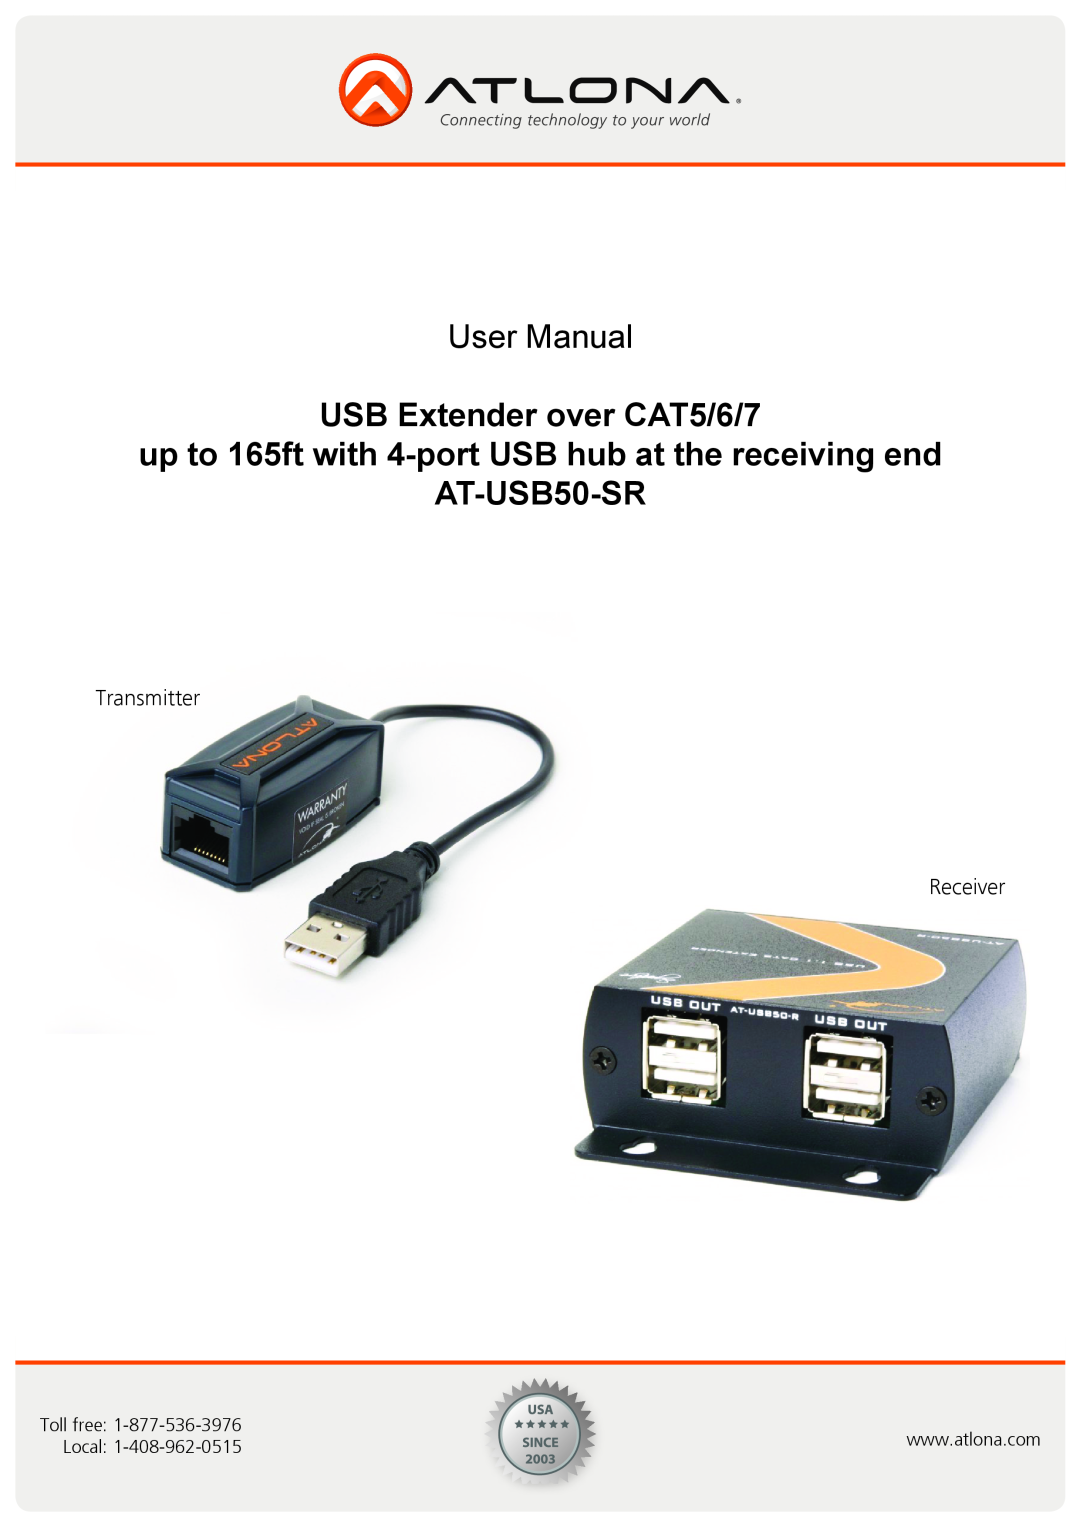 Atlona AT-USB50-SR user manual User Manual, USB Extender over CAT5/6/7, Toll free, Local 